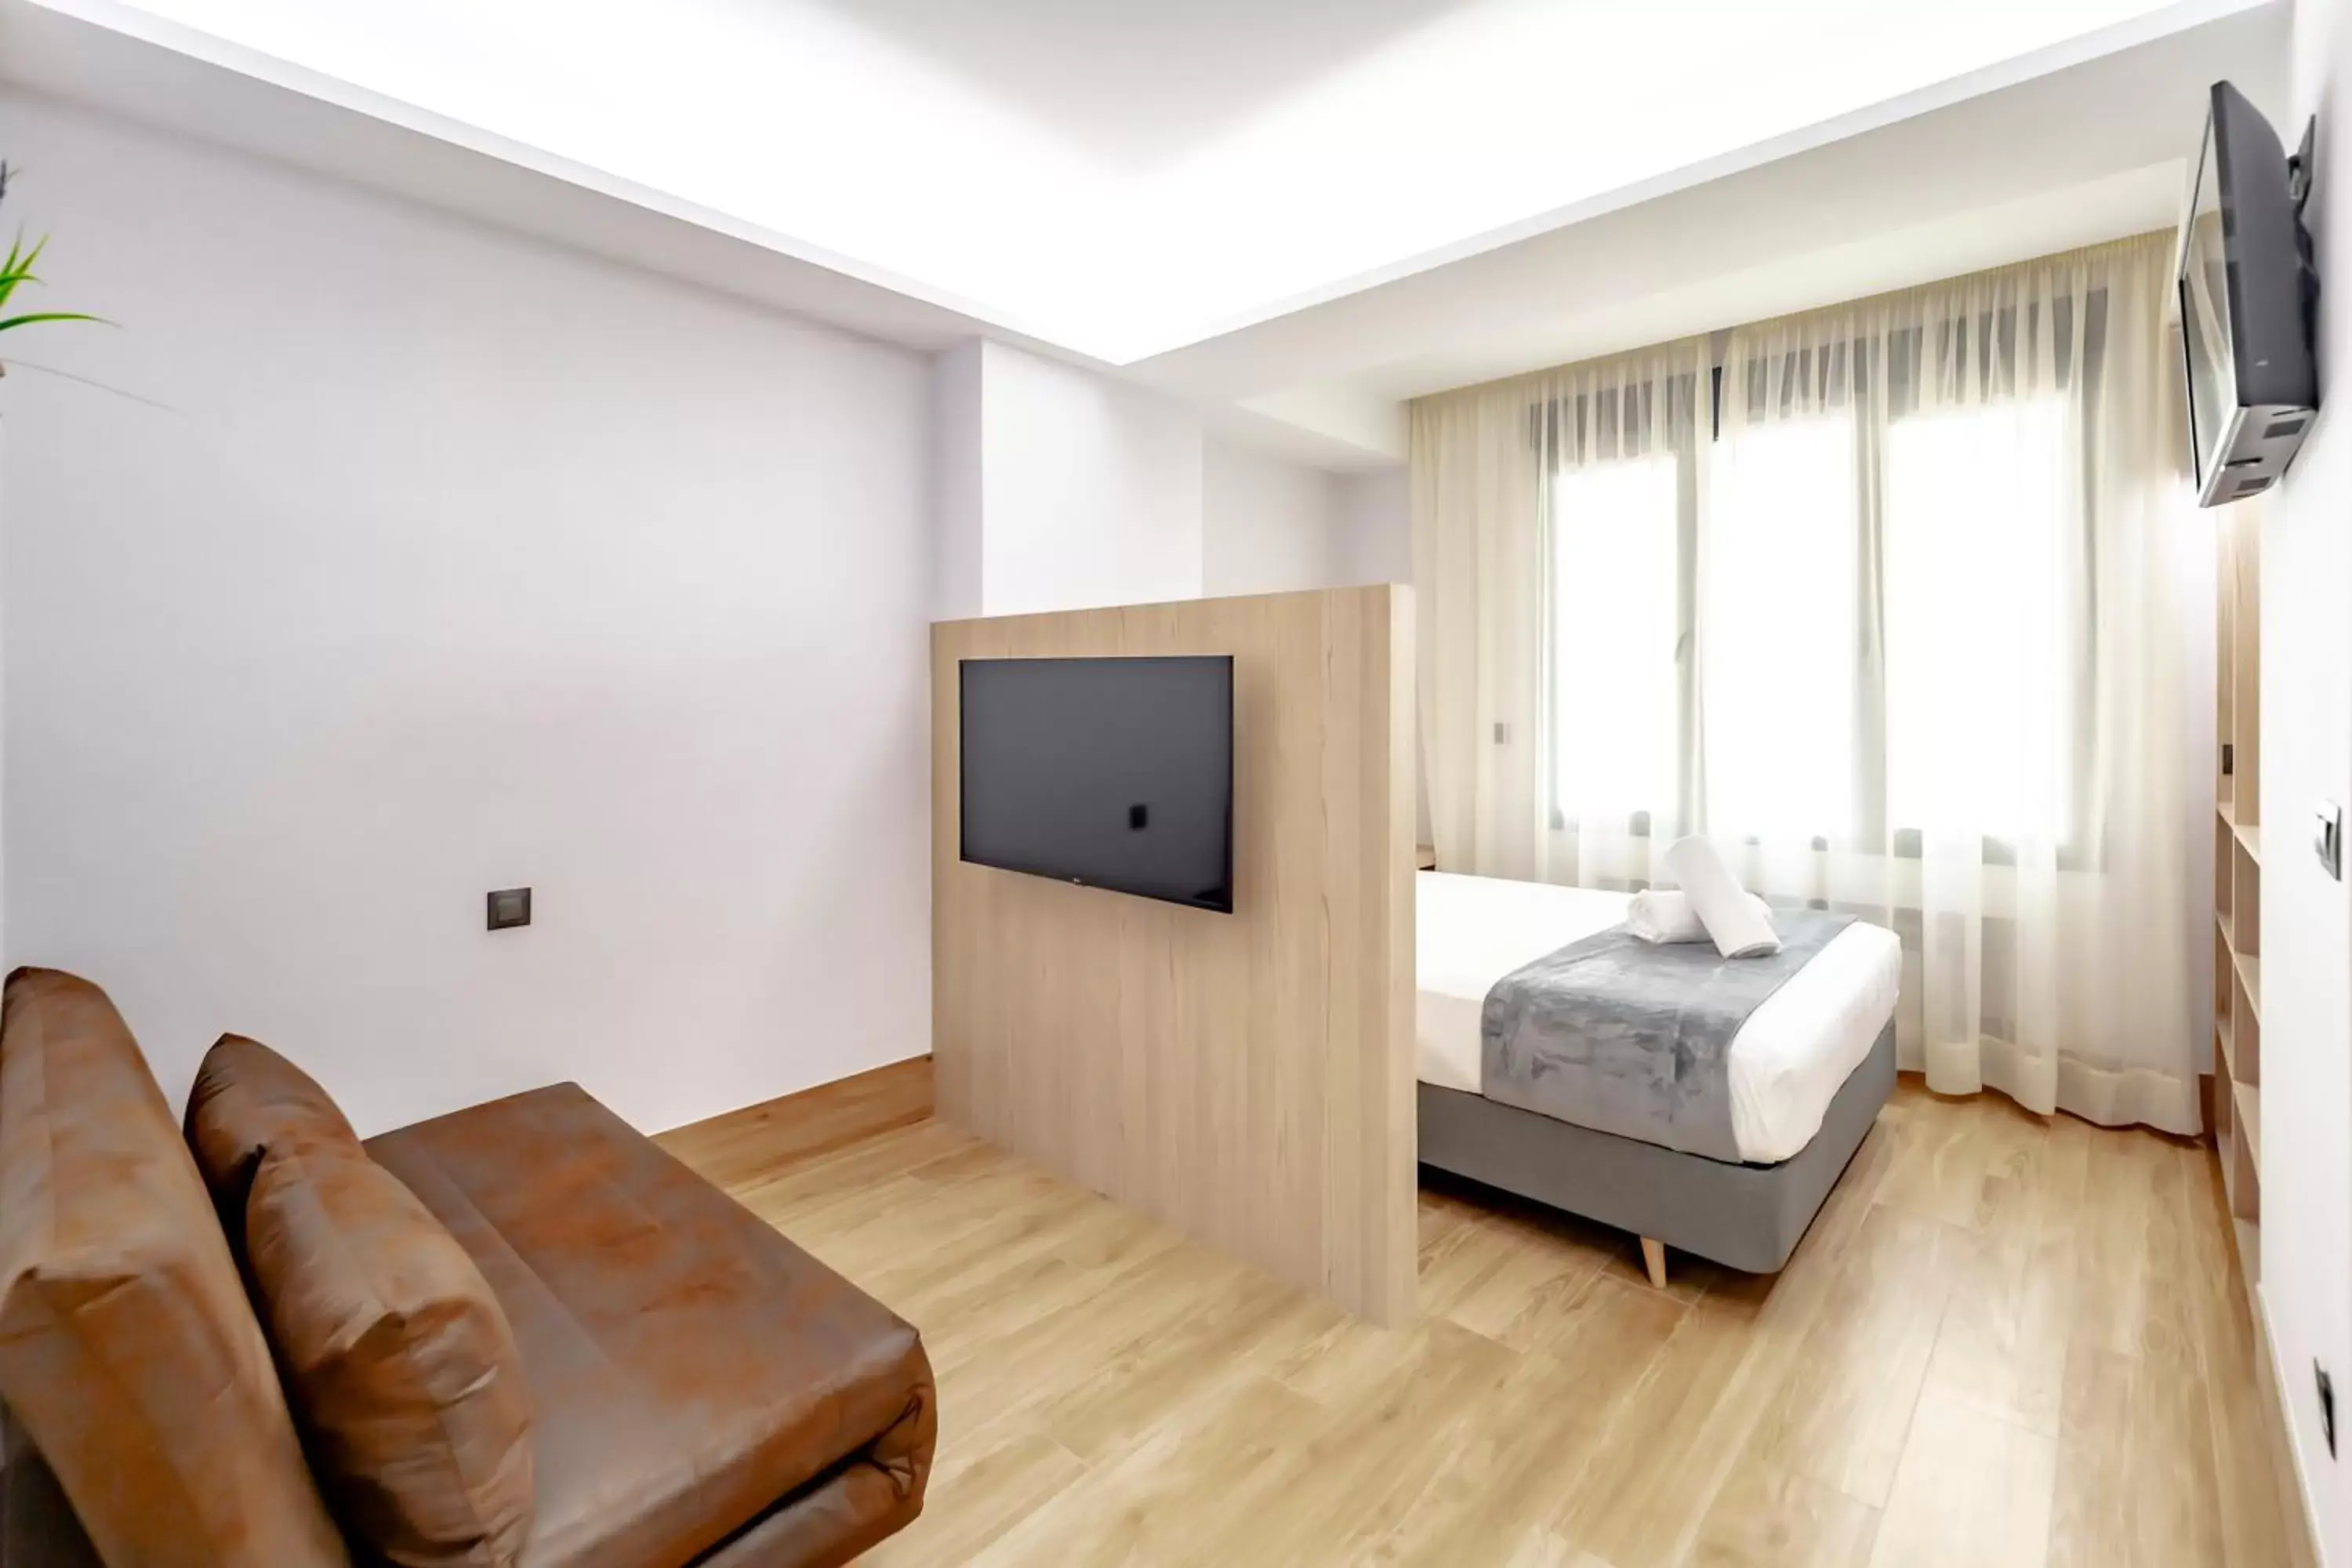 TV and multimedia, Seating Area in dobohomes - Montesa 20 Apartamentos